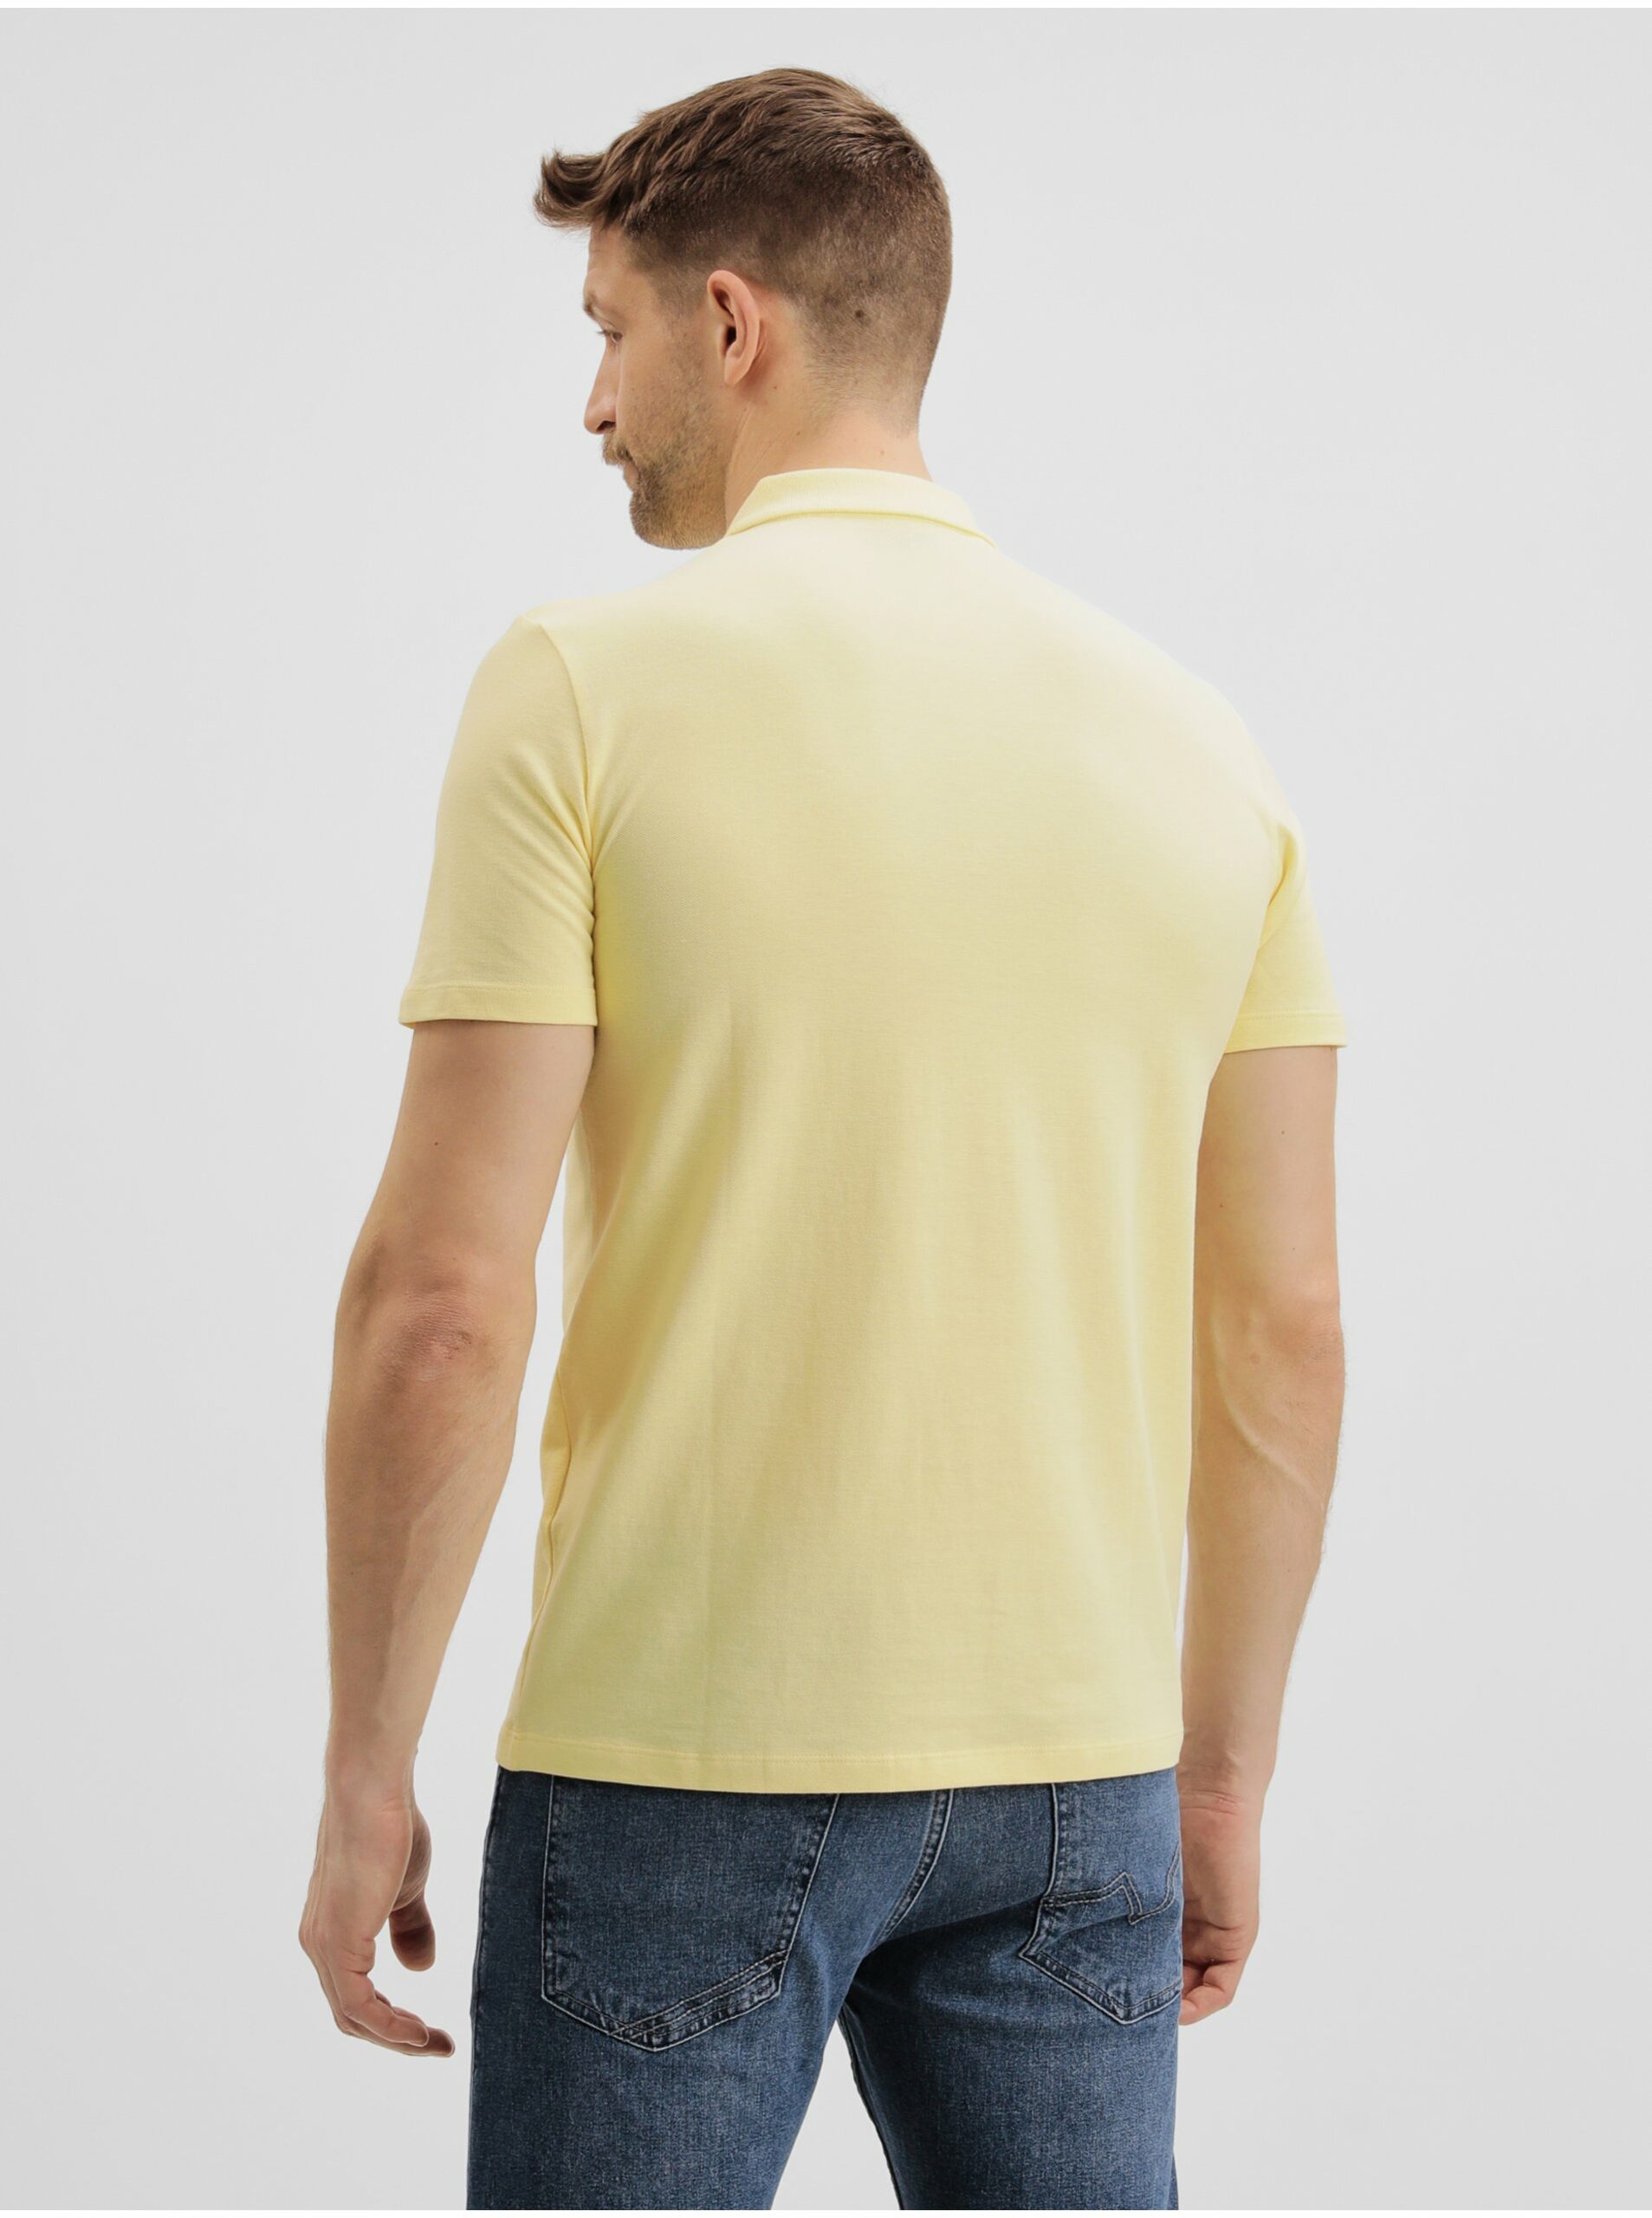 Žlté pánske polo tričko Selected Homme Lance